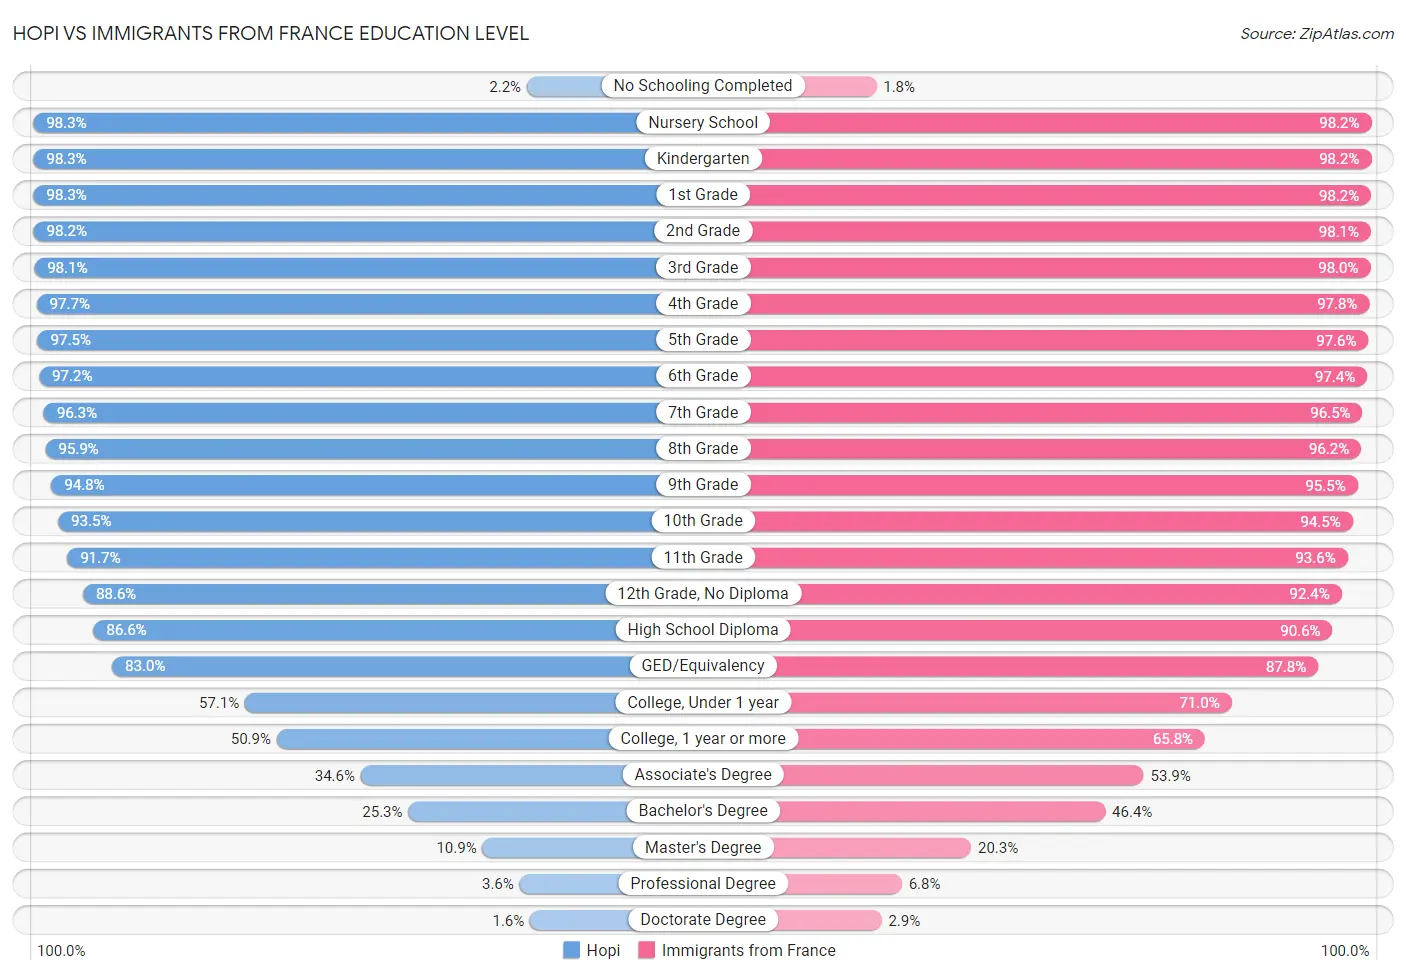 Hopi vs Immigrants from France Education Level